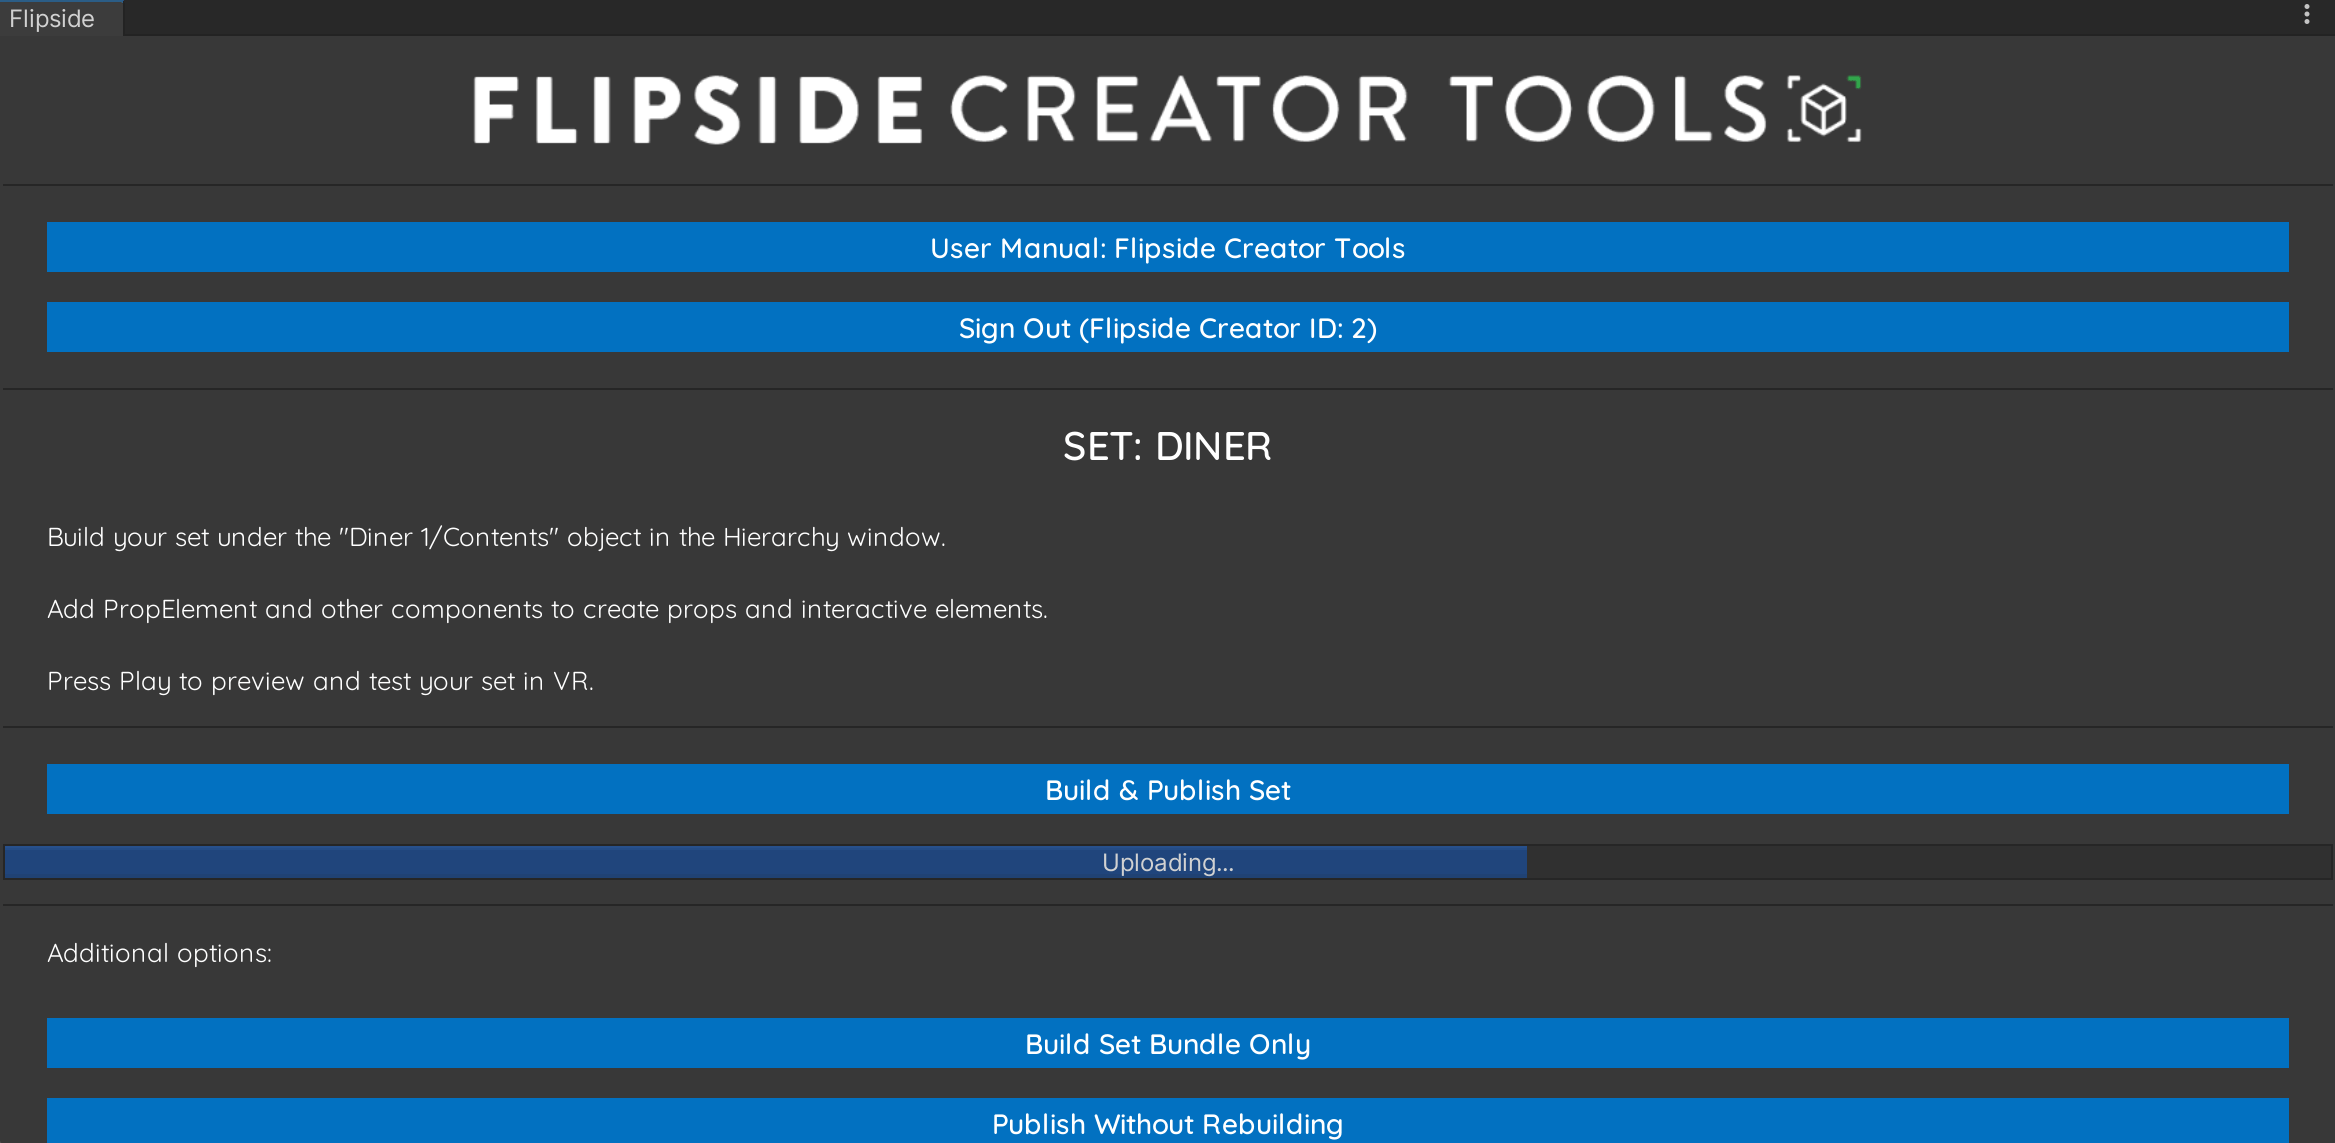 Flipside Creator Tools - Build & Publish Set